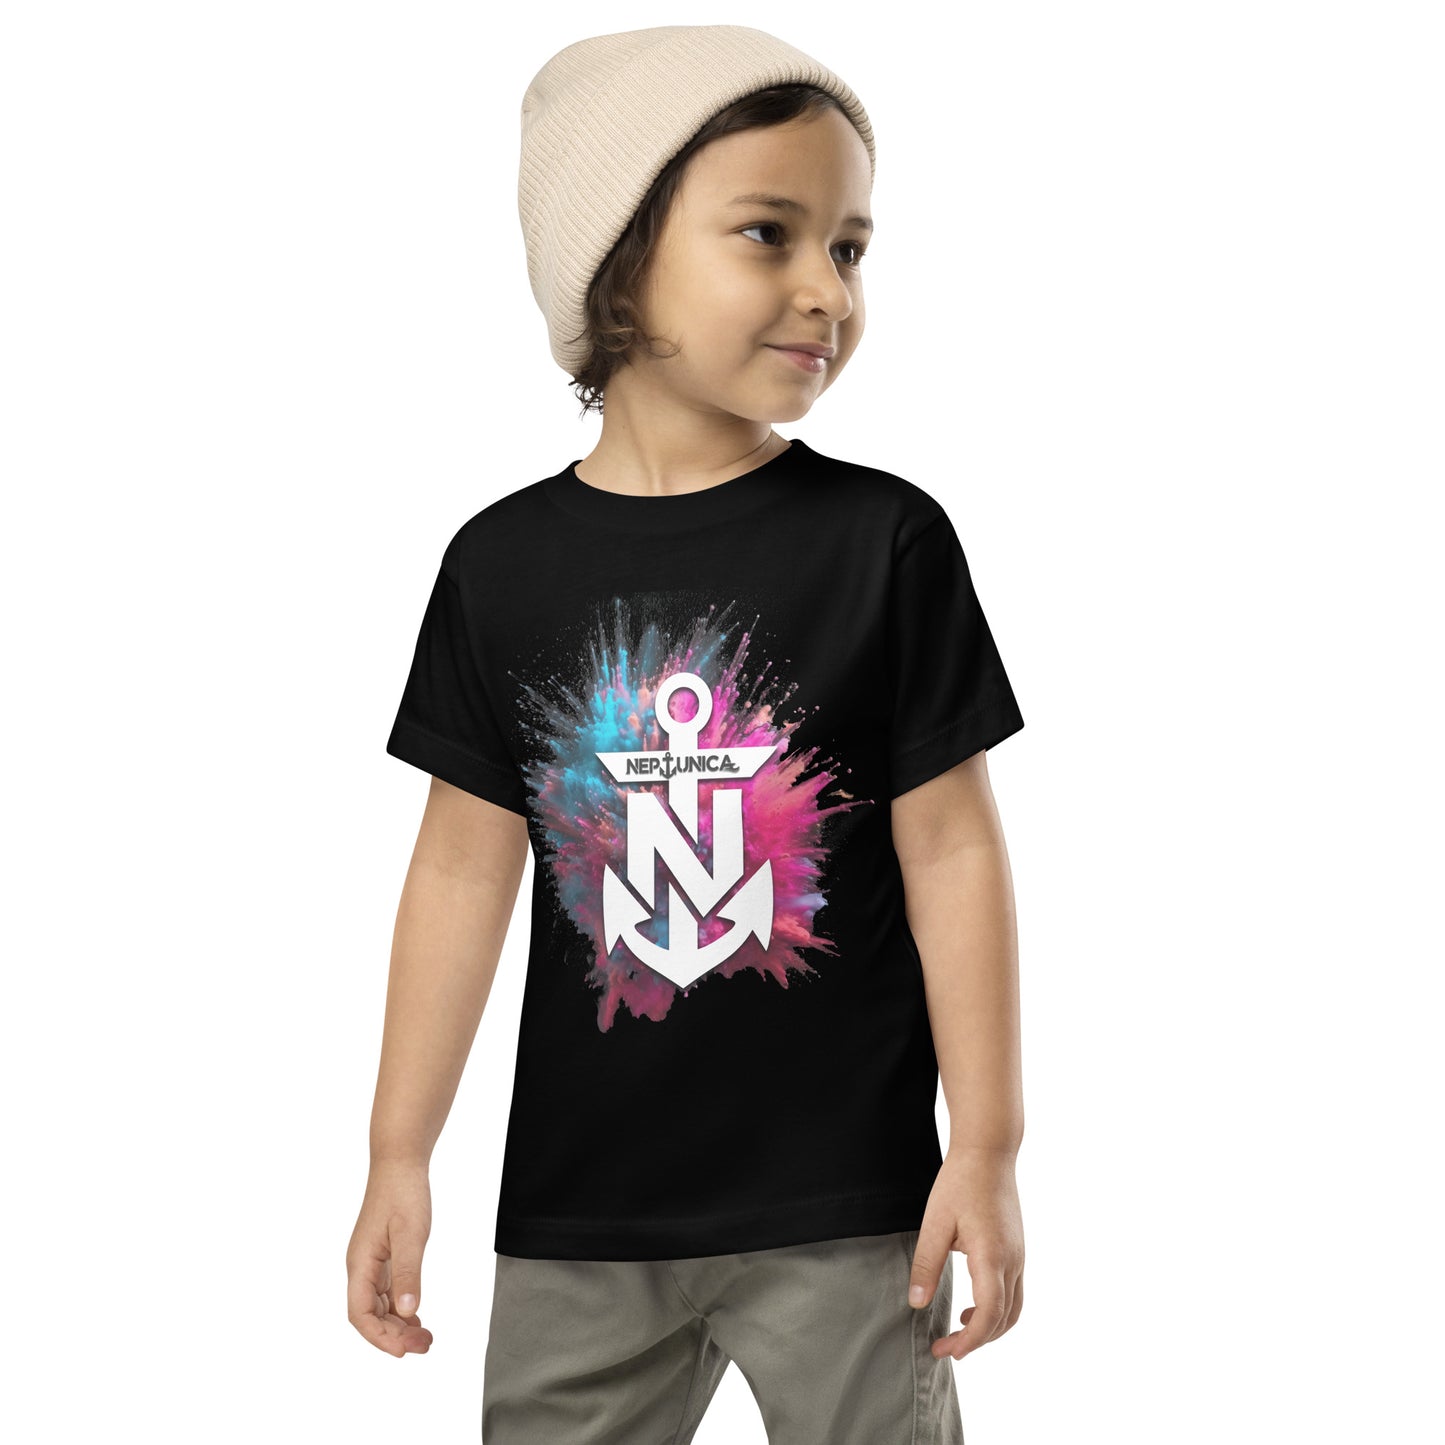 Neptunica Toddler Short Sleeve T-Shirt | Black Colorsplash Edition